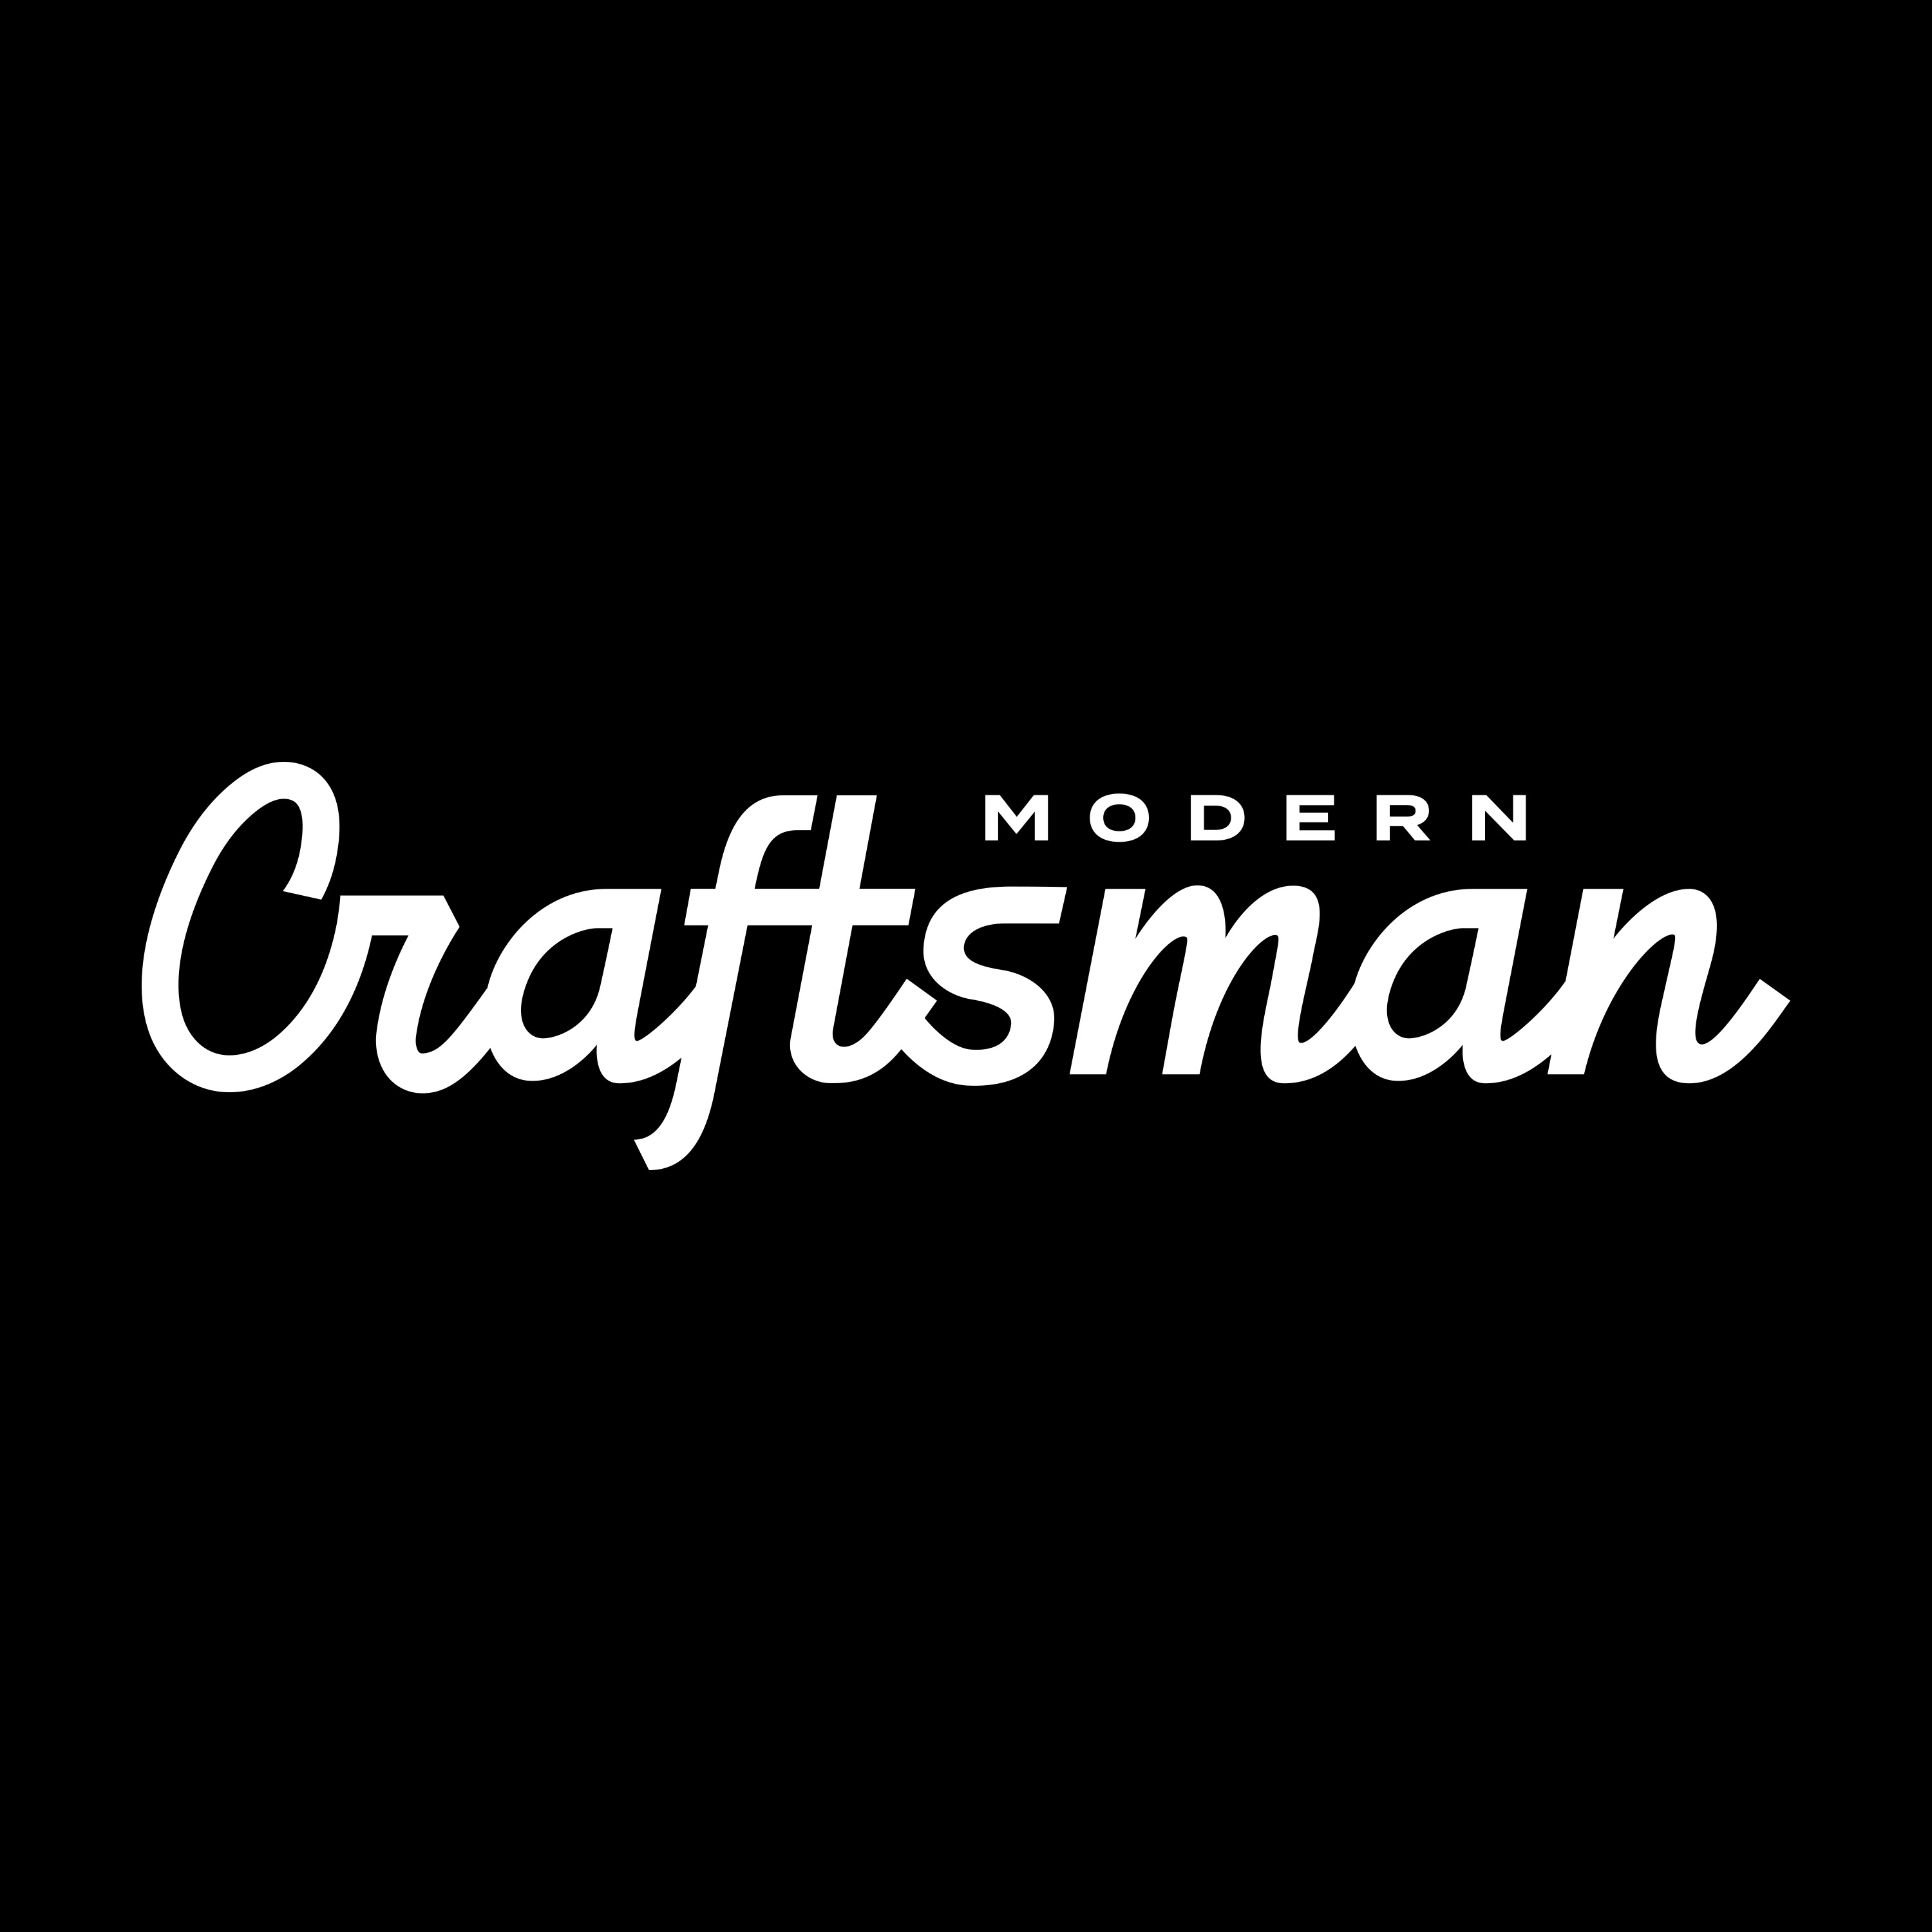 Modern Craftsman